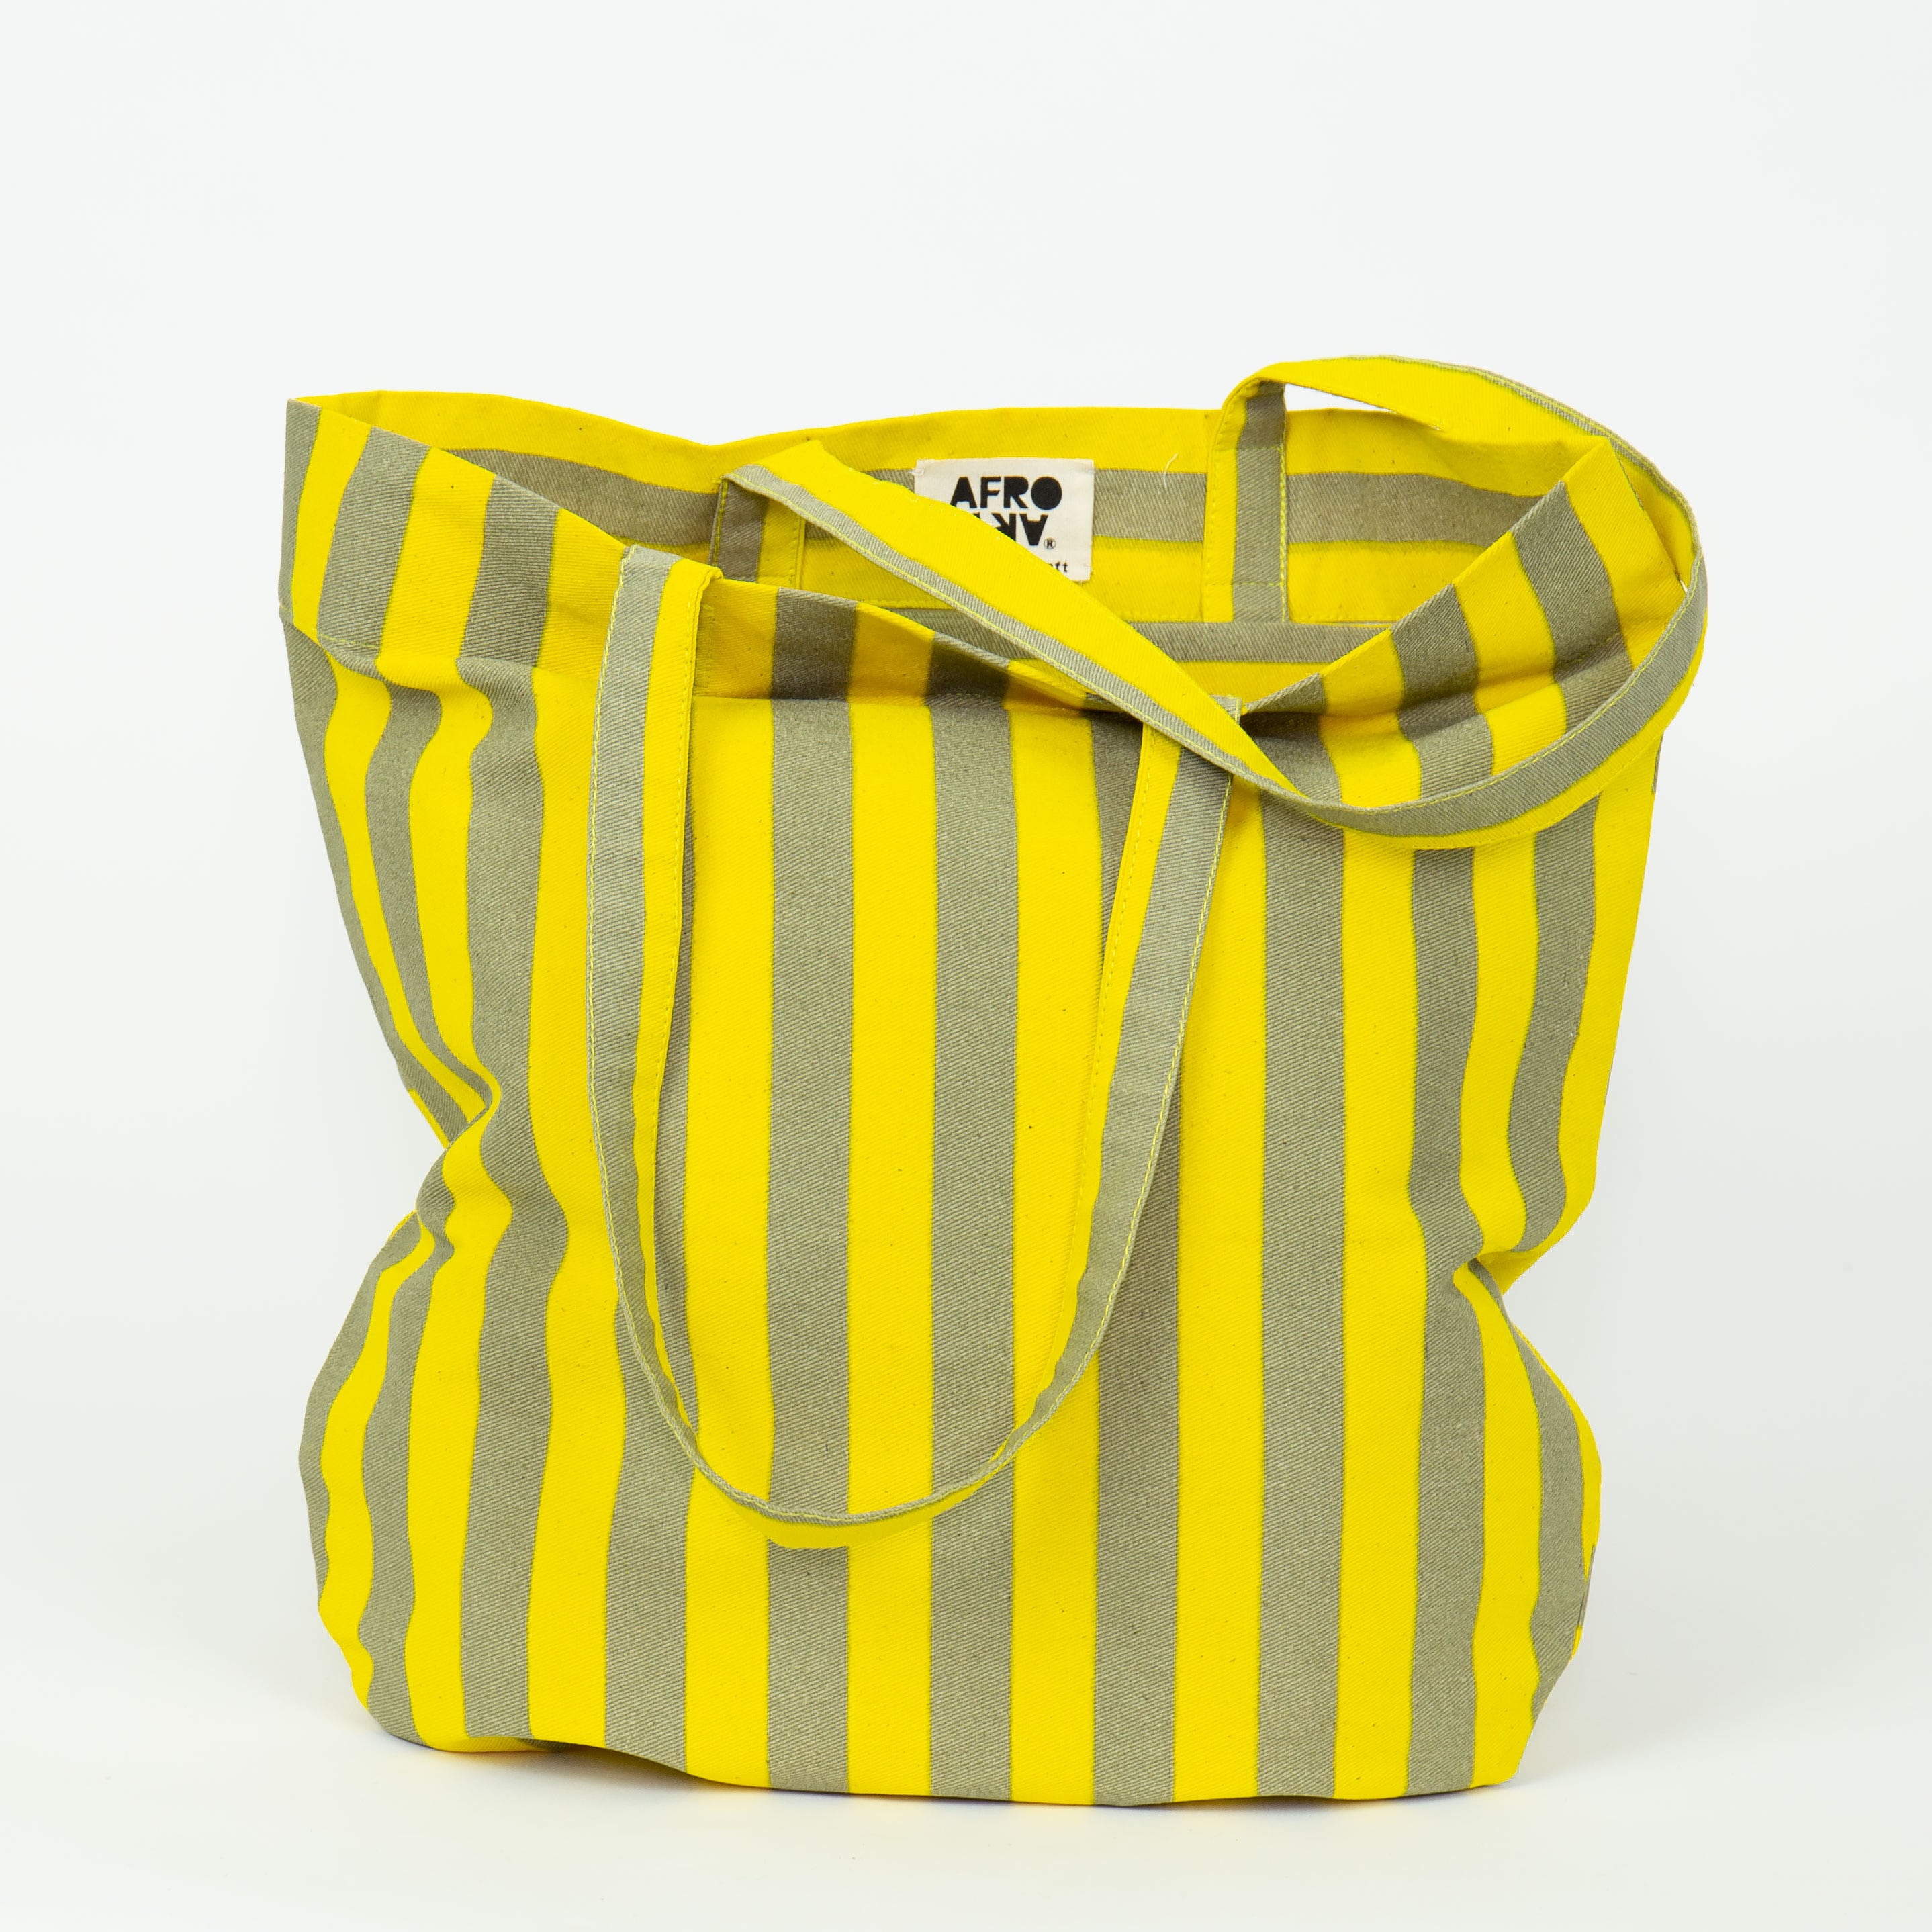 RANDA Bag, yellow/grey